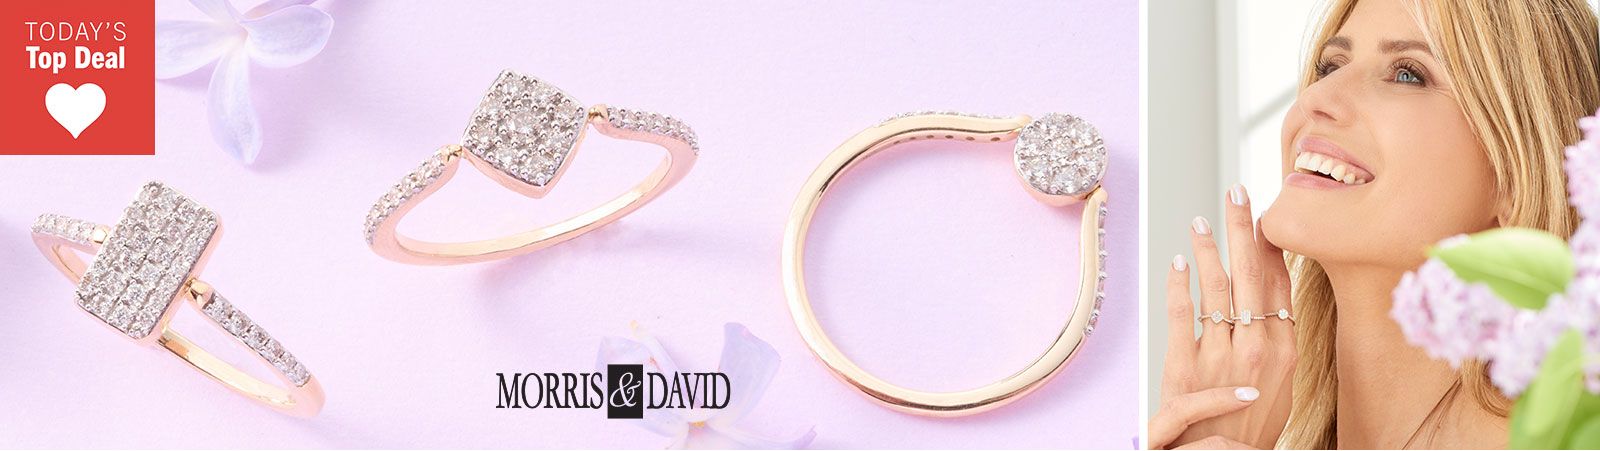 213-557 Morris & David 14K Gold Choice of Shape 0.25ctw Diamond Flip Ring